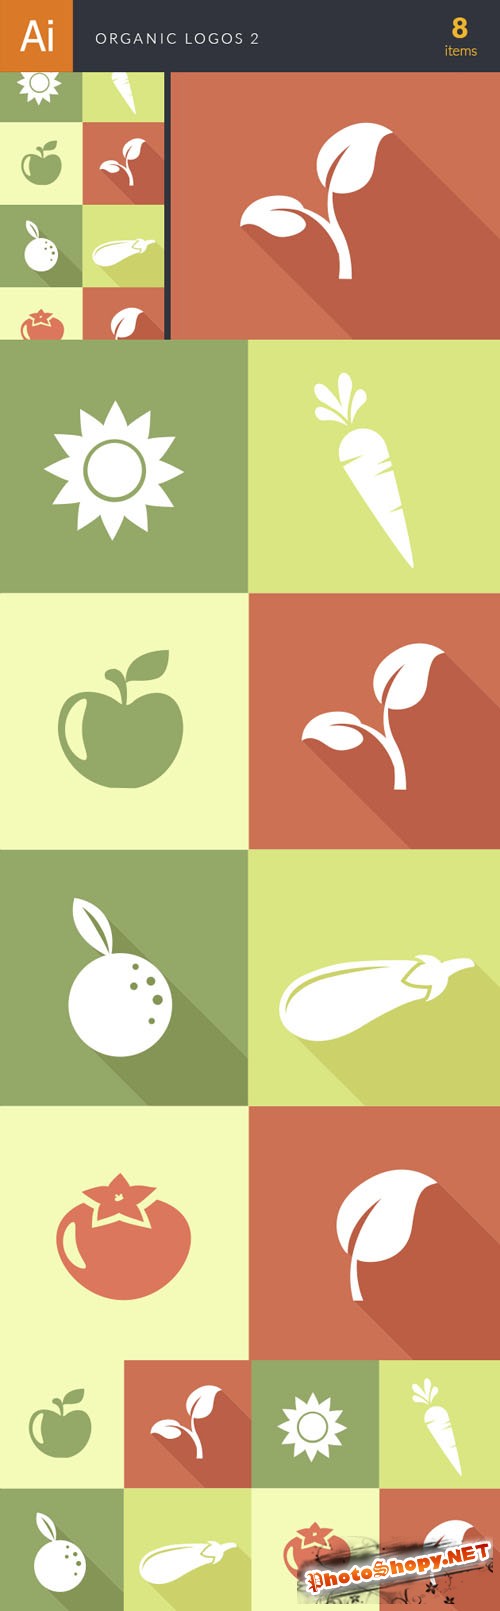 Organic Logos Vector Illustrations Pack 2